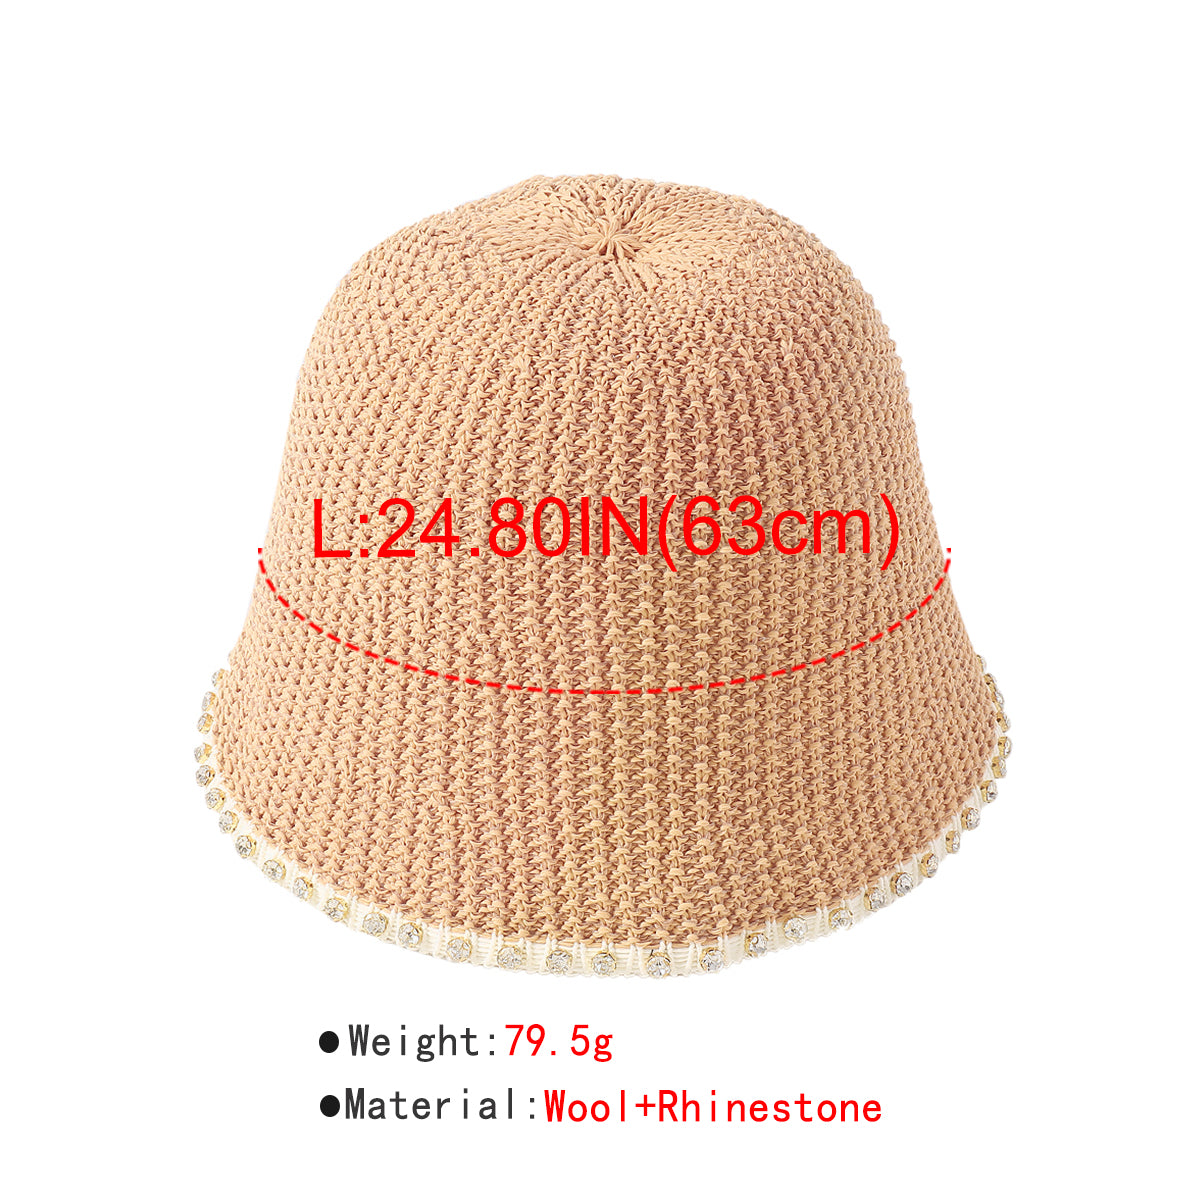 Q0197 Packable Rhinestone Trim Bucket Hat